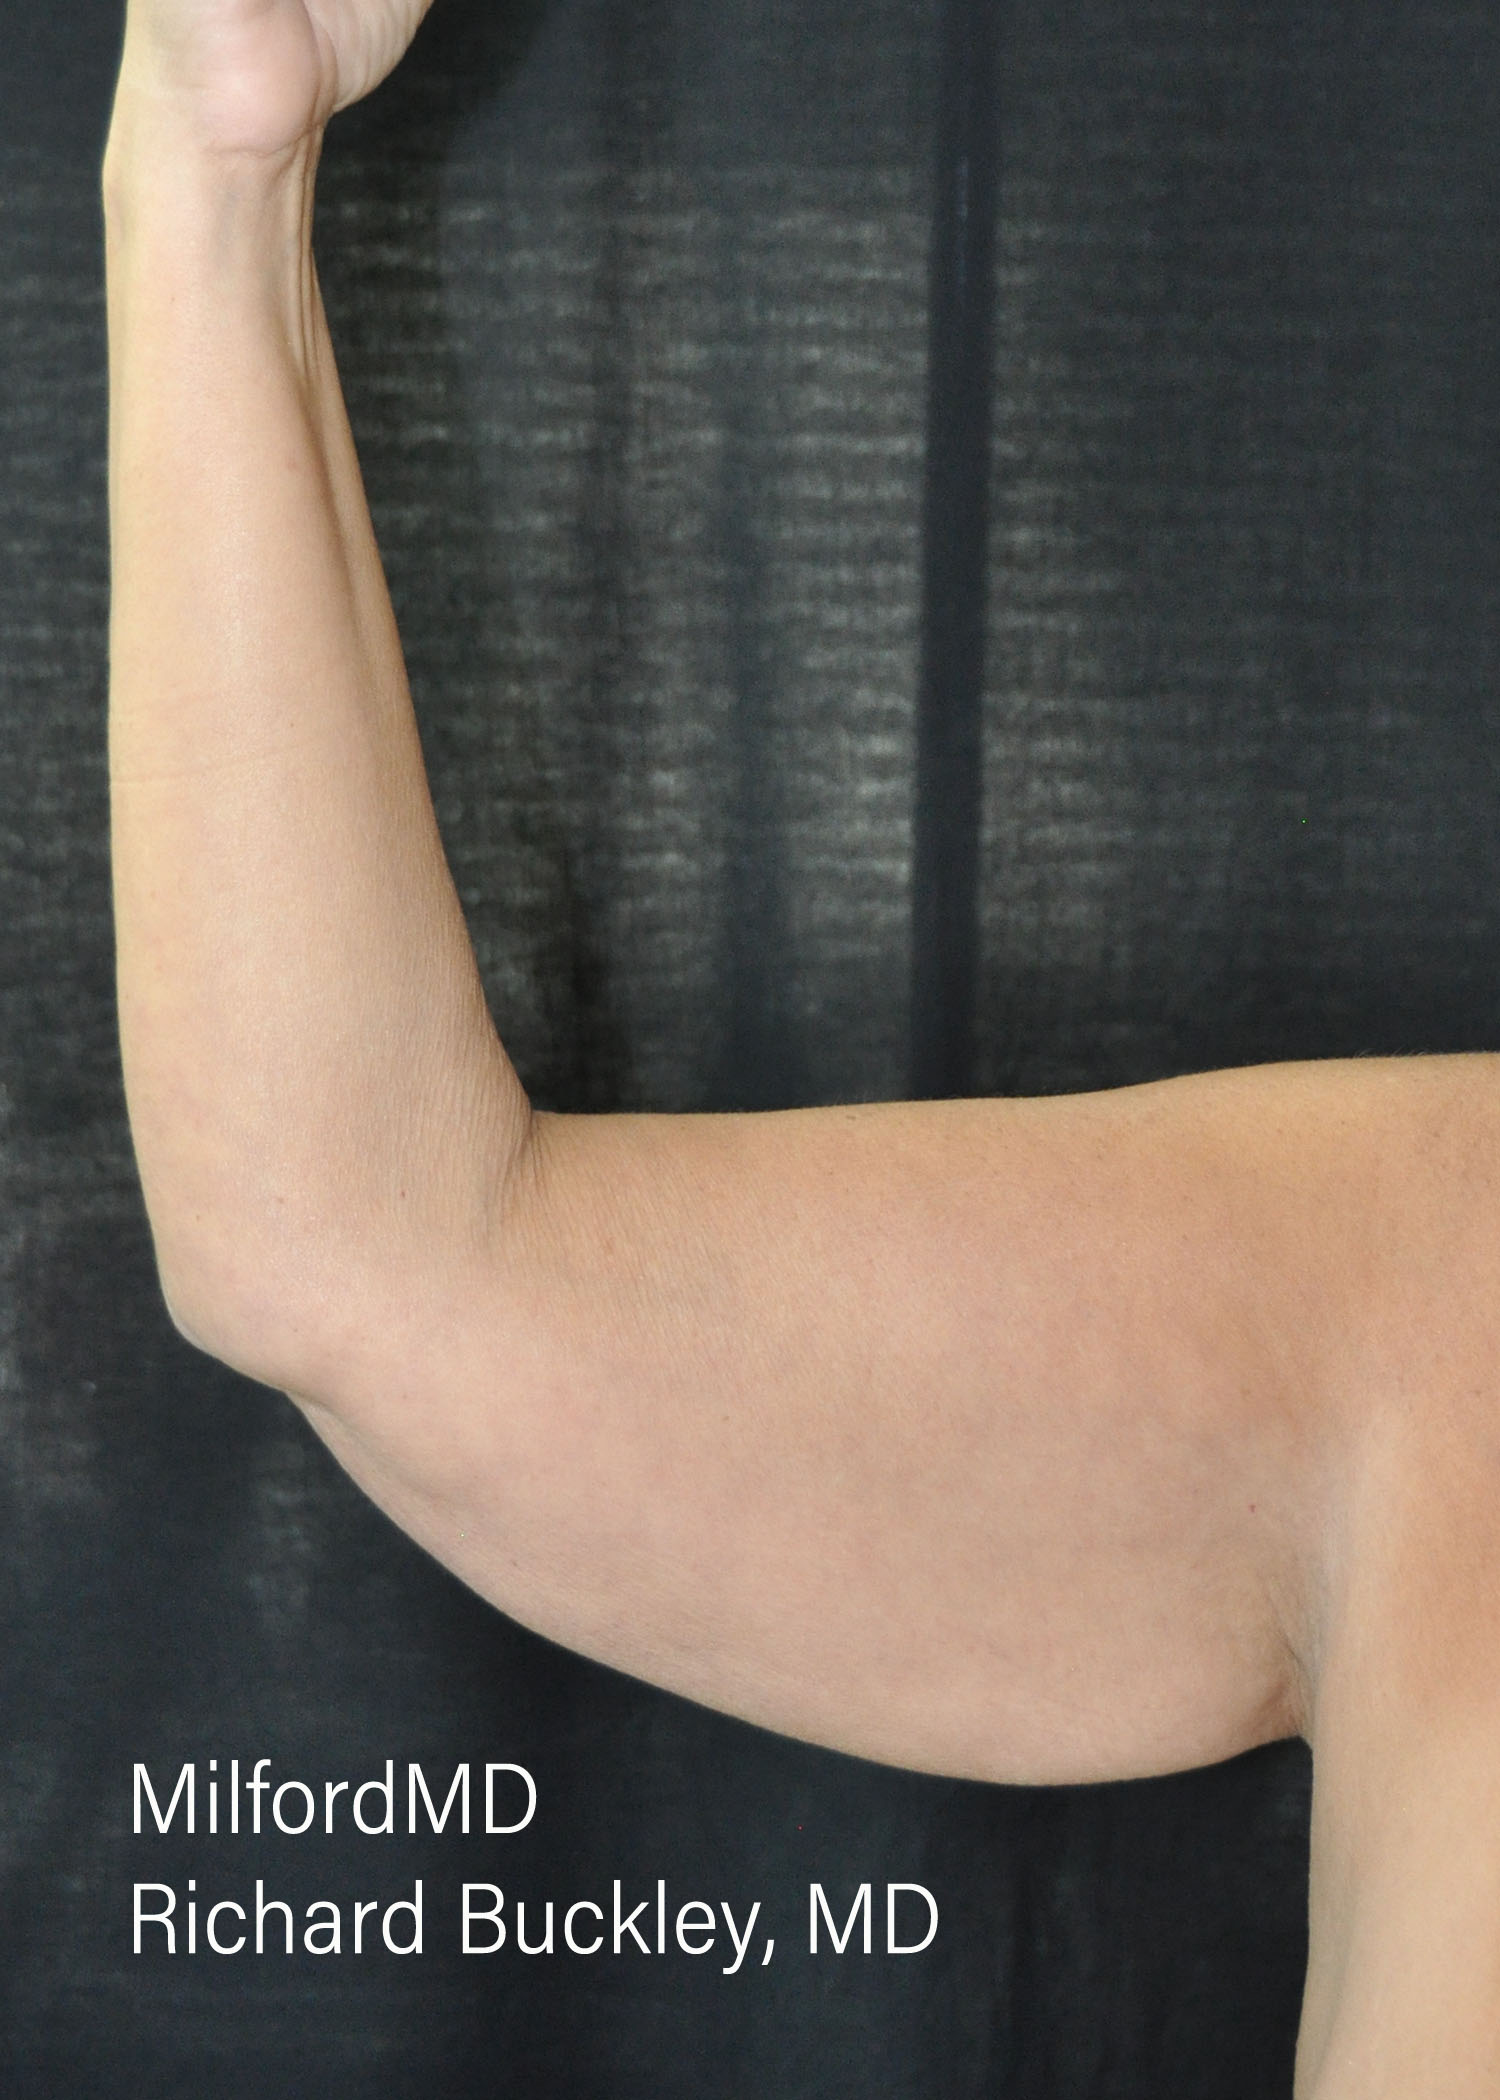 Before & After Photos Brachioplasty (Arm Lift),Brachioplasty Arm Lift near me,Brachioplasty near me, Brachioplasty (Arm Lift) Procedures